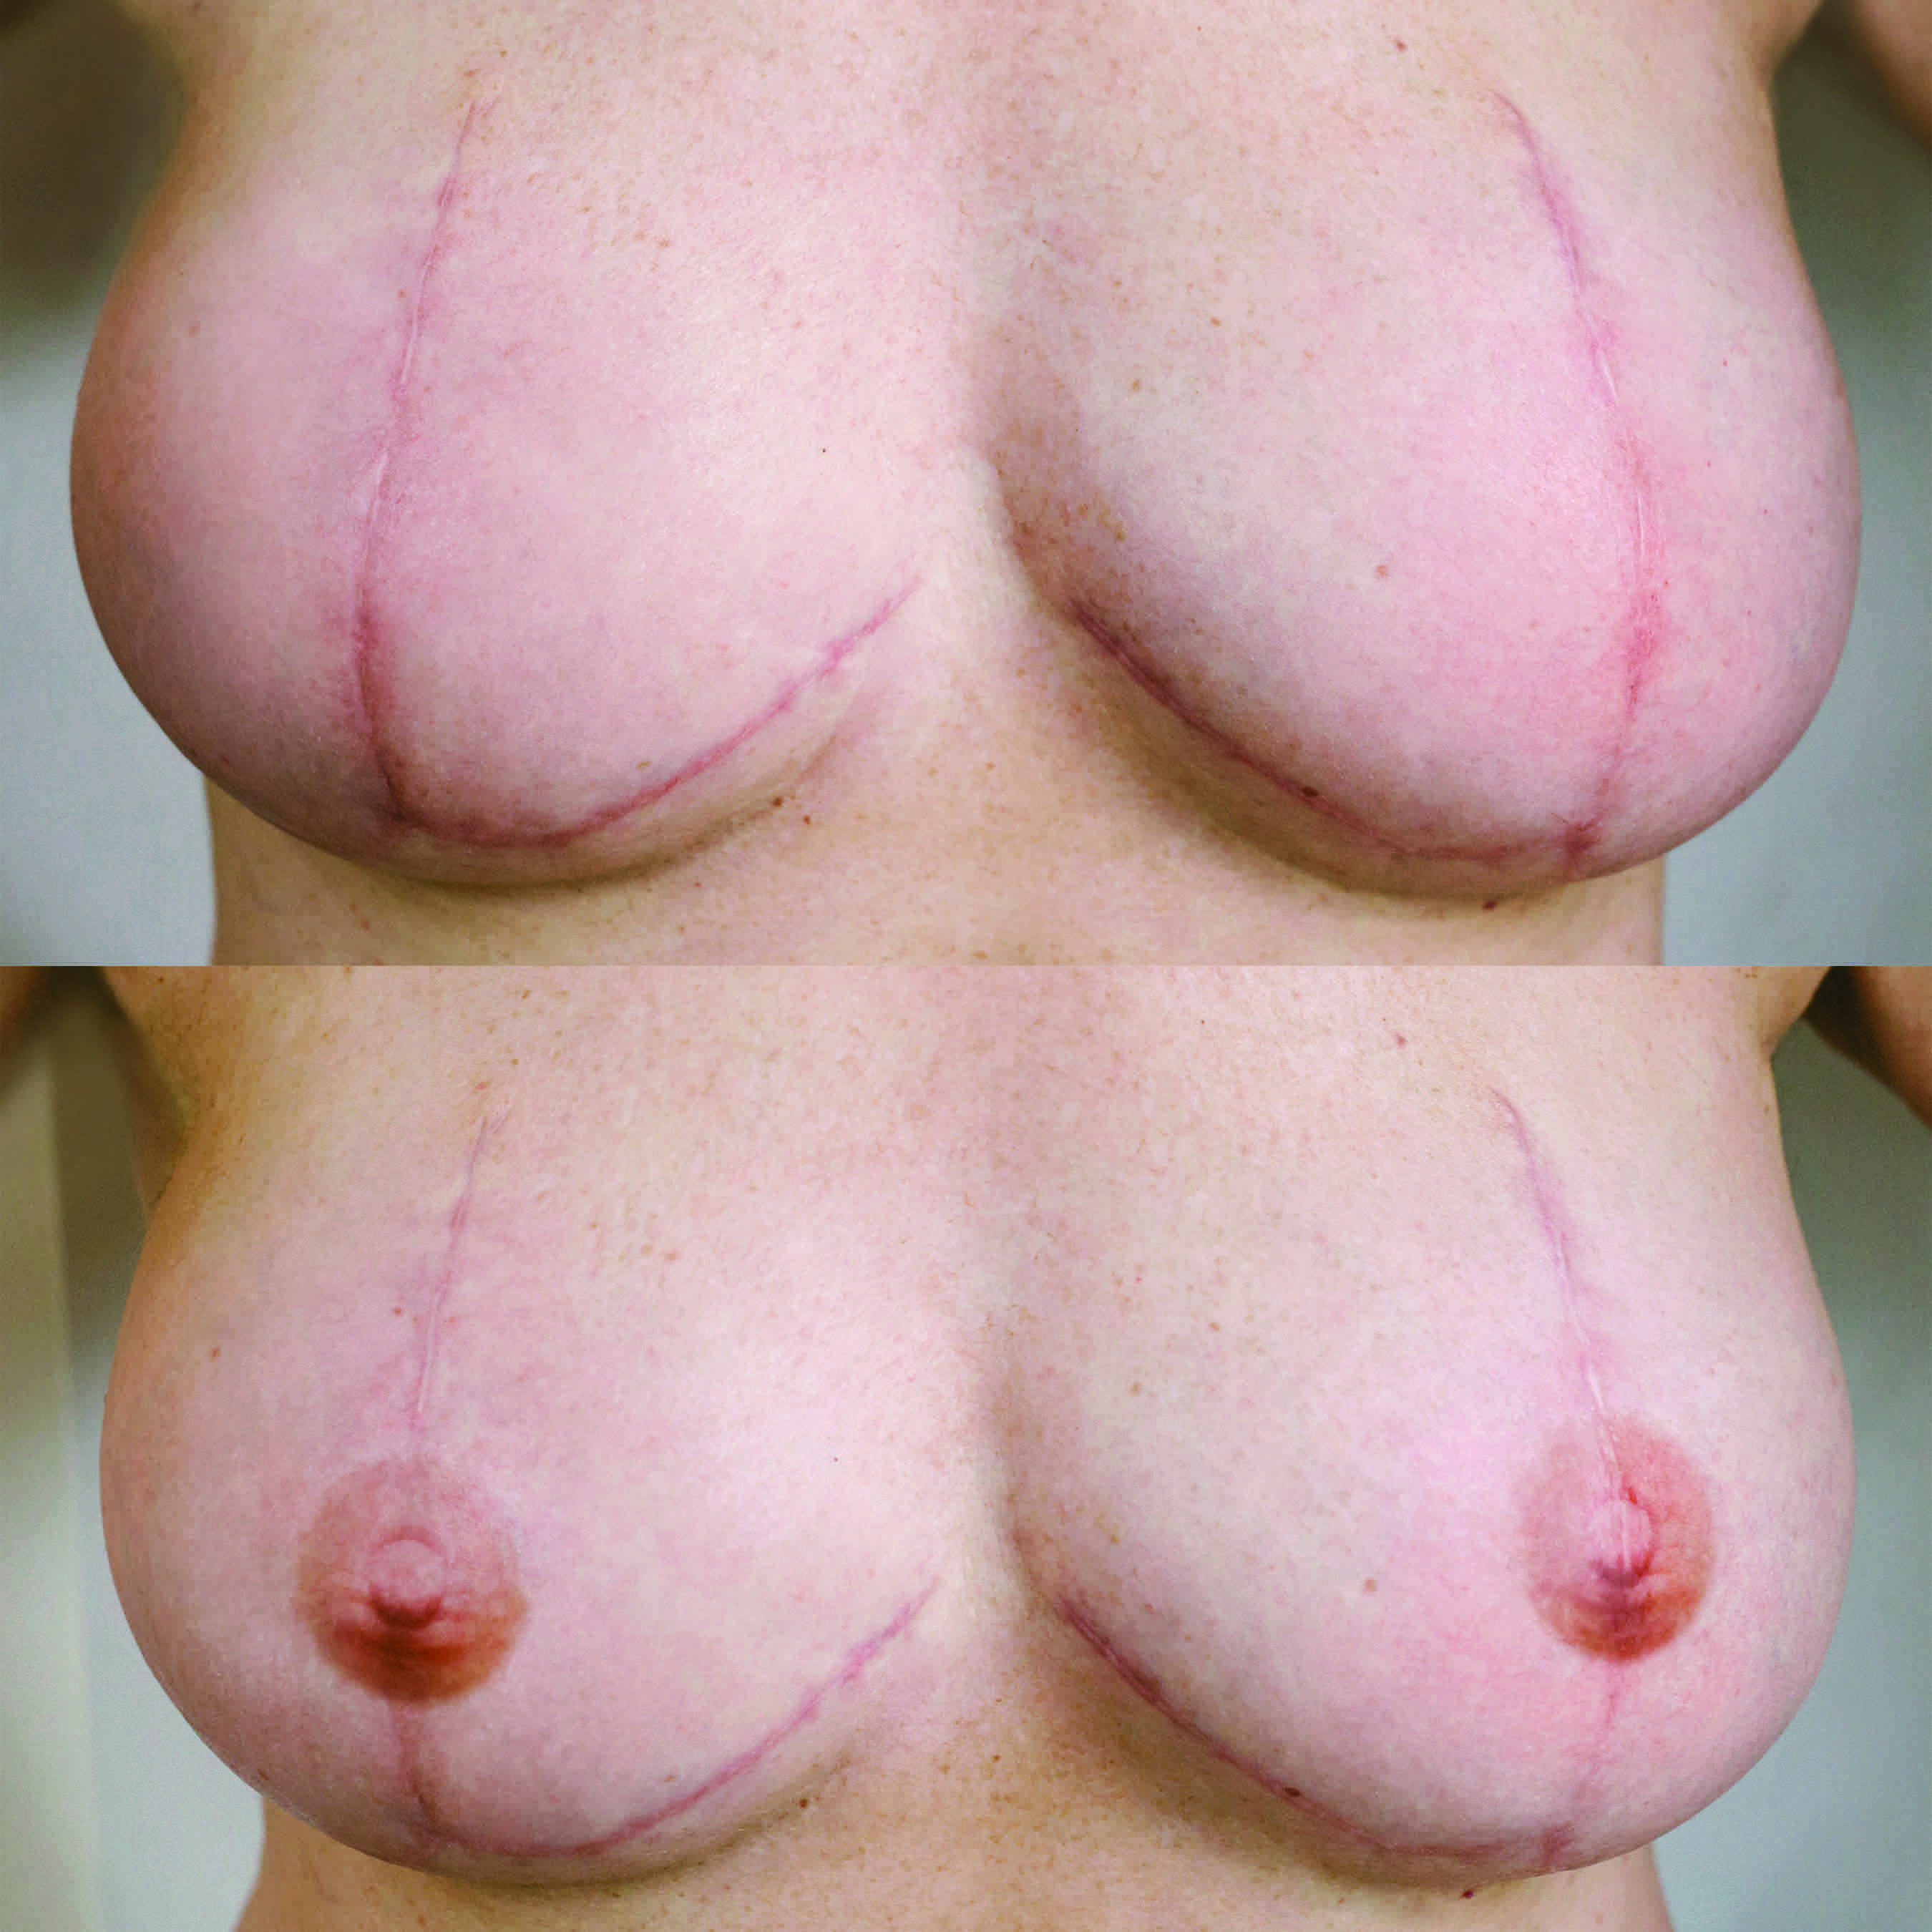 Female breasts